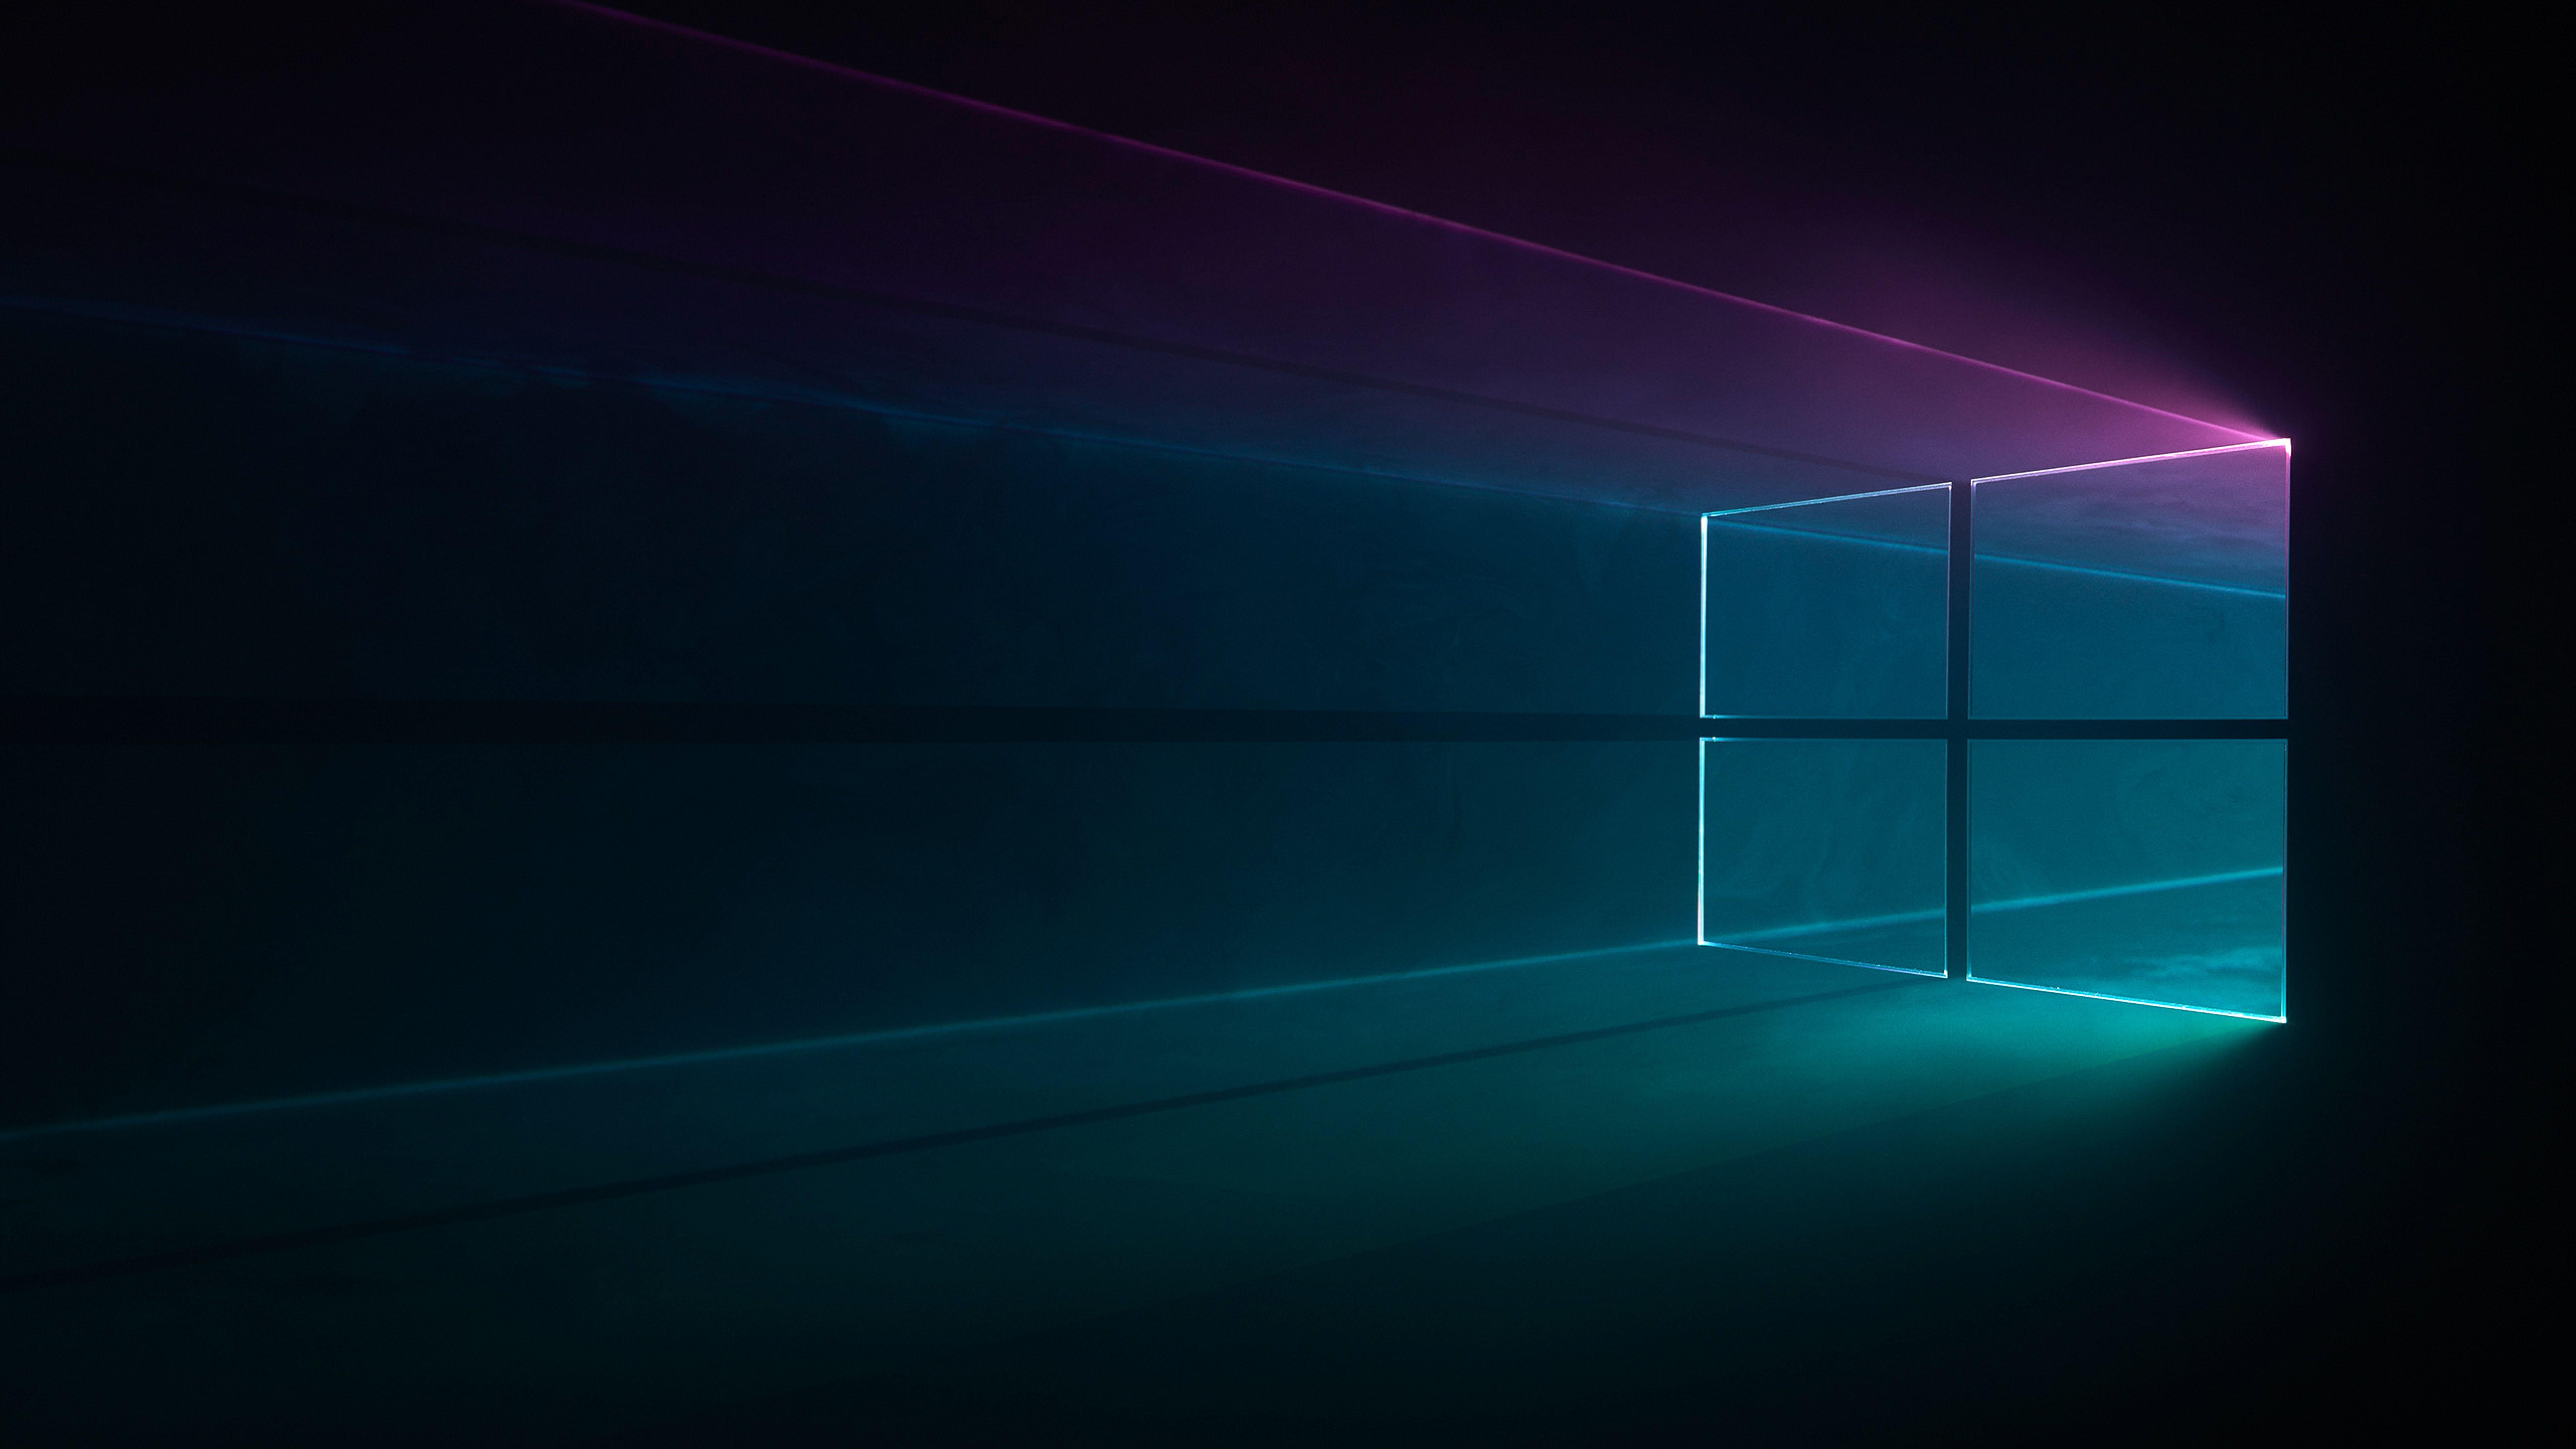 Windows 10 8k Wallpapers - Top Free Windows 10 8k Backgrounds